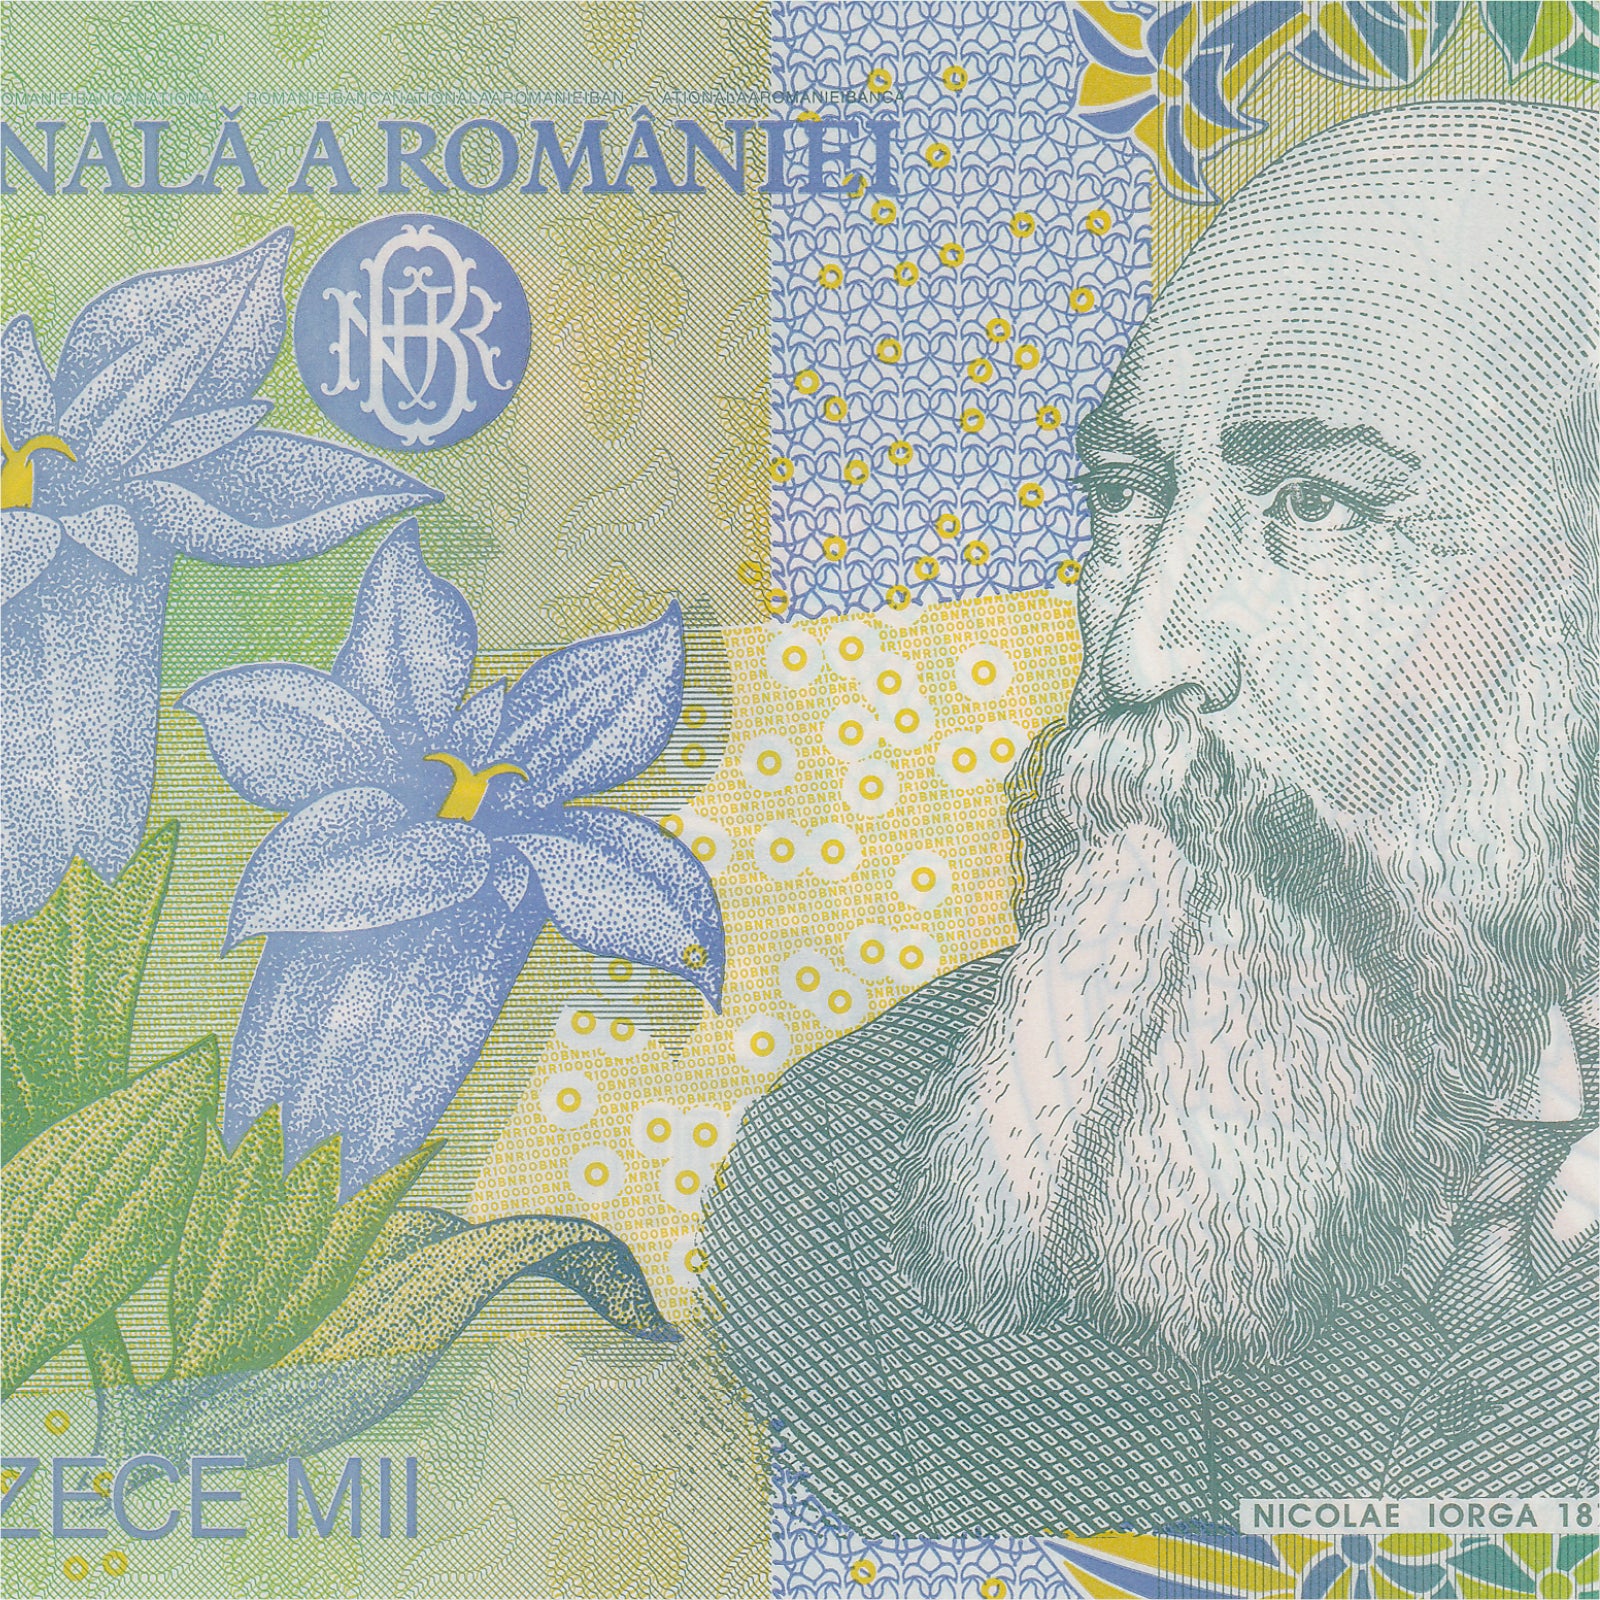 Romania 10000 Lei, 2000 (2001), B273b, P112b, UNC - Robert's World Money - World Banknotes